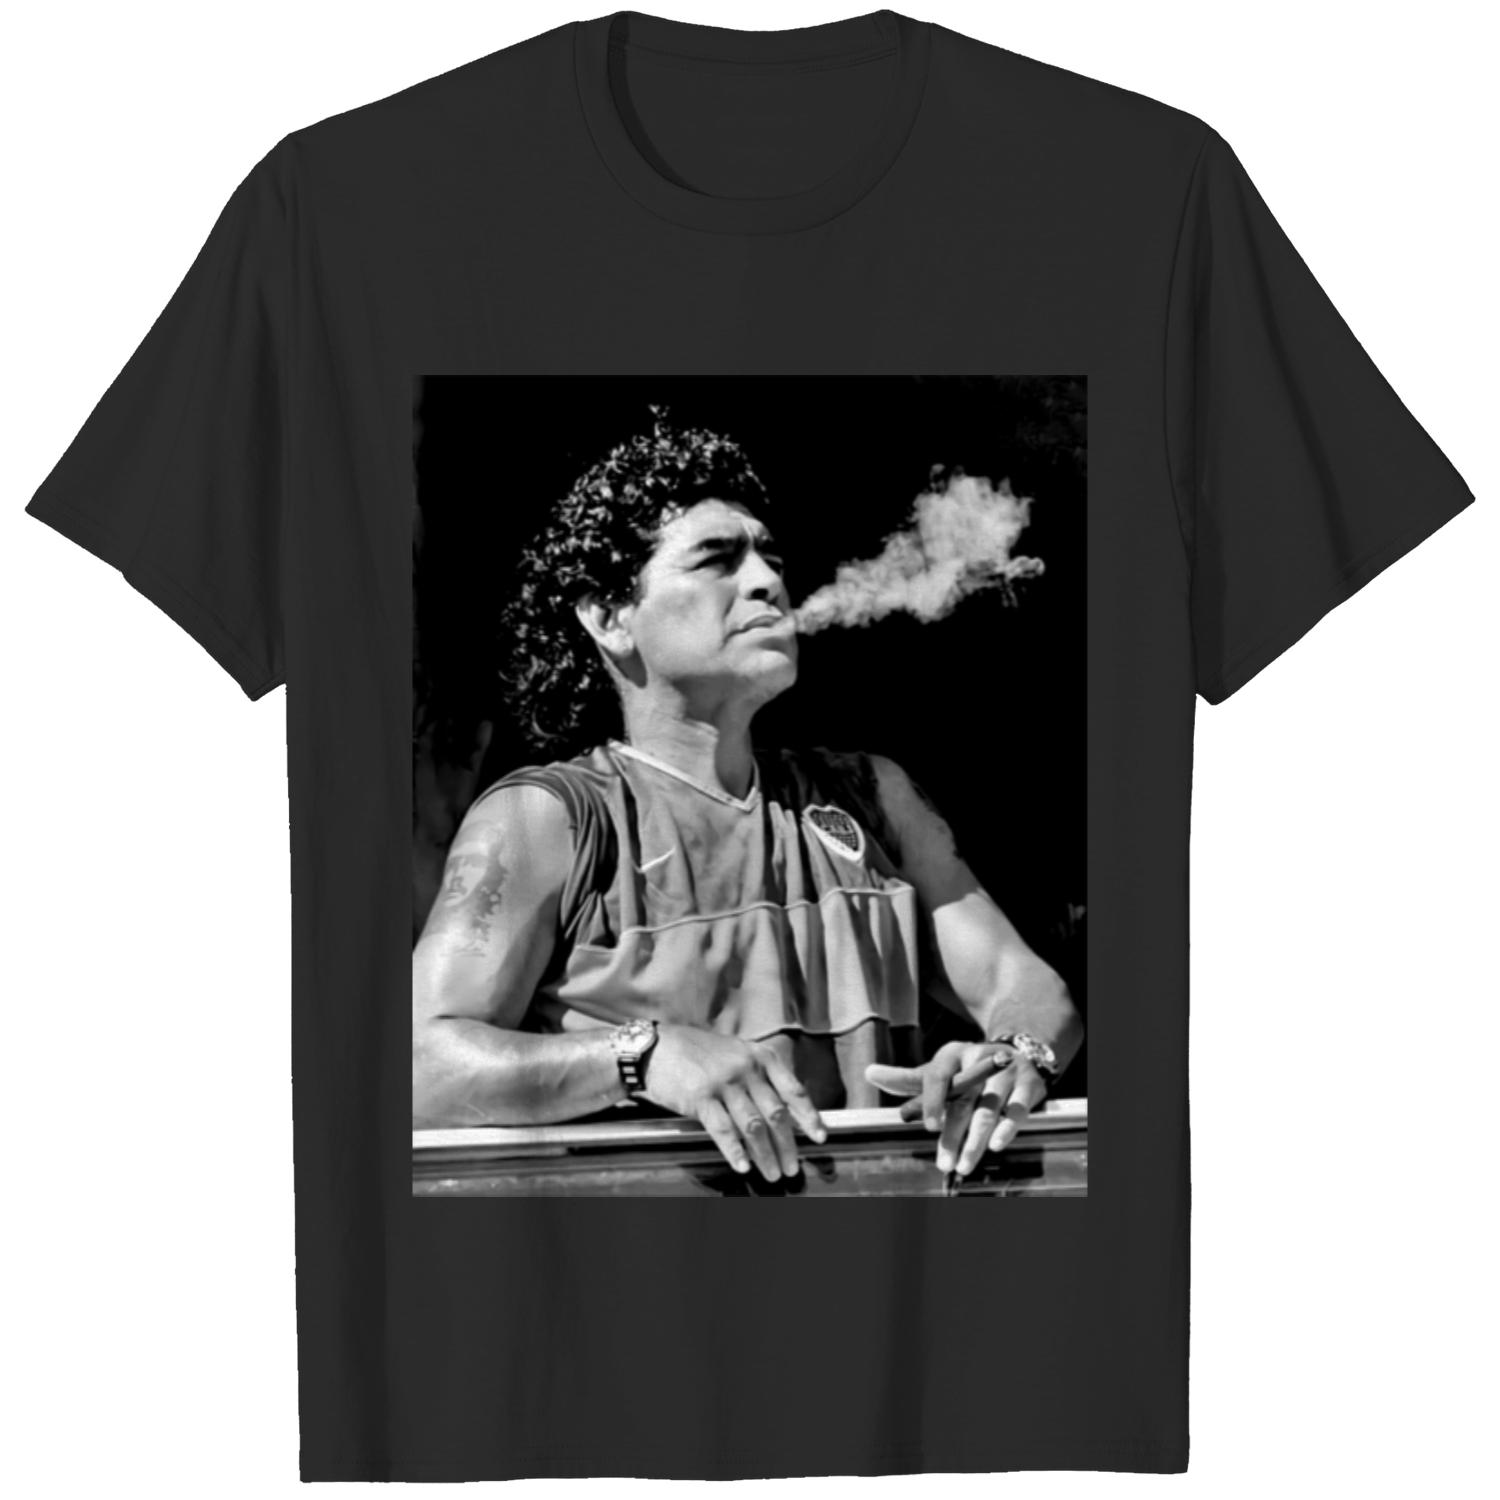 SMOKING MY LIFE - Diego Maradona - T-Shirt